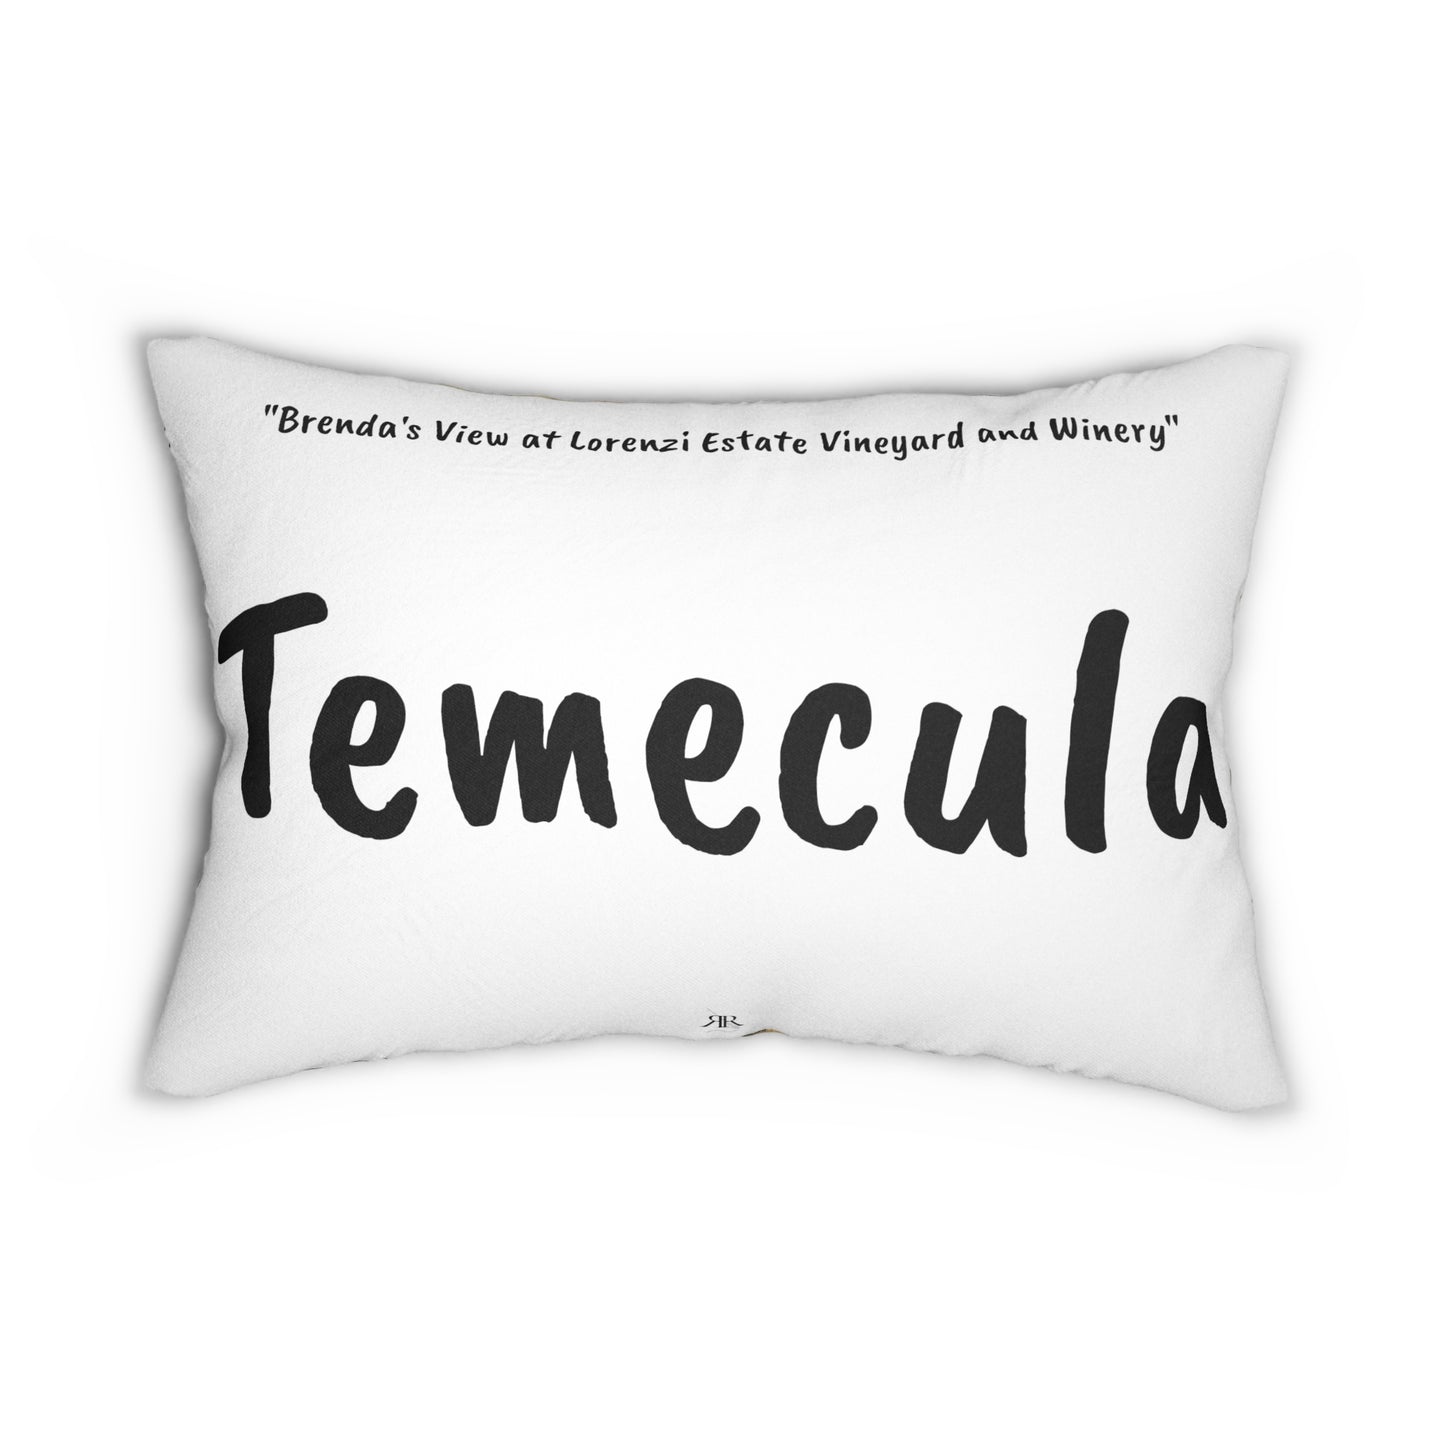 Temecula Lumbar Pillow featuring "Brenda's View at Lorenzi Estate" painting and "Temecula"